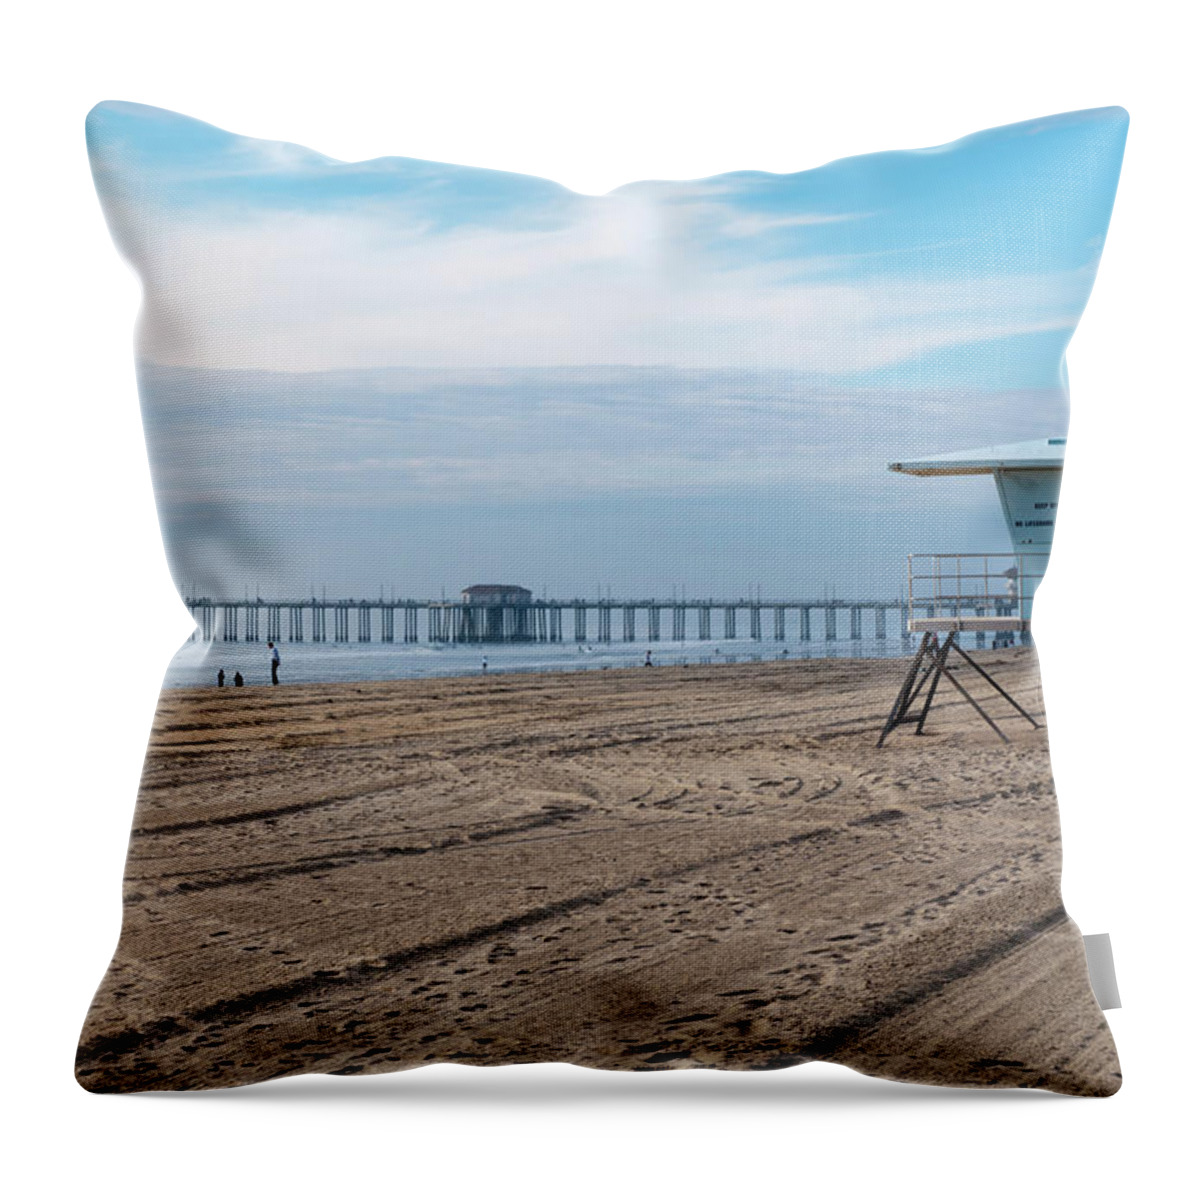 Built Structure Throw Pillow featuring the photograph Usa, California, Huntington Beach Pier by Sergio Pitamitz